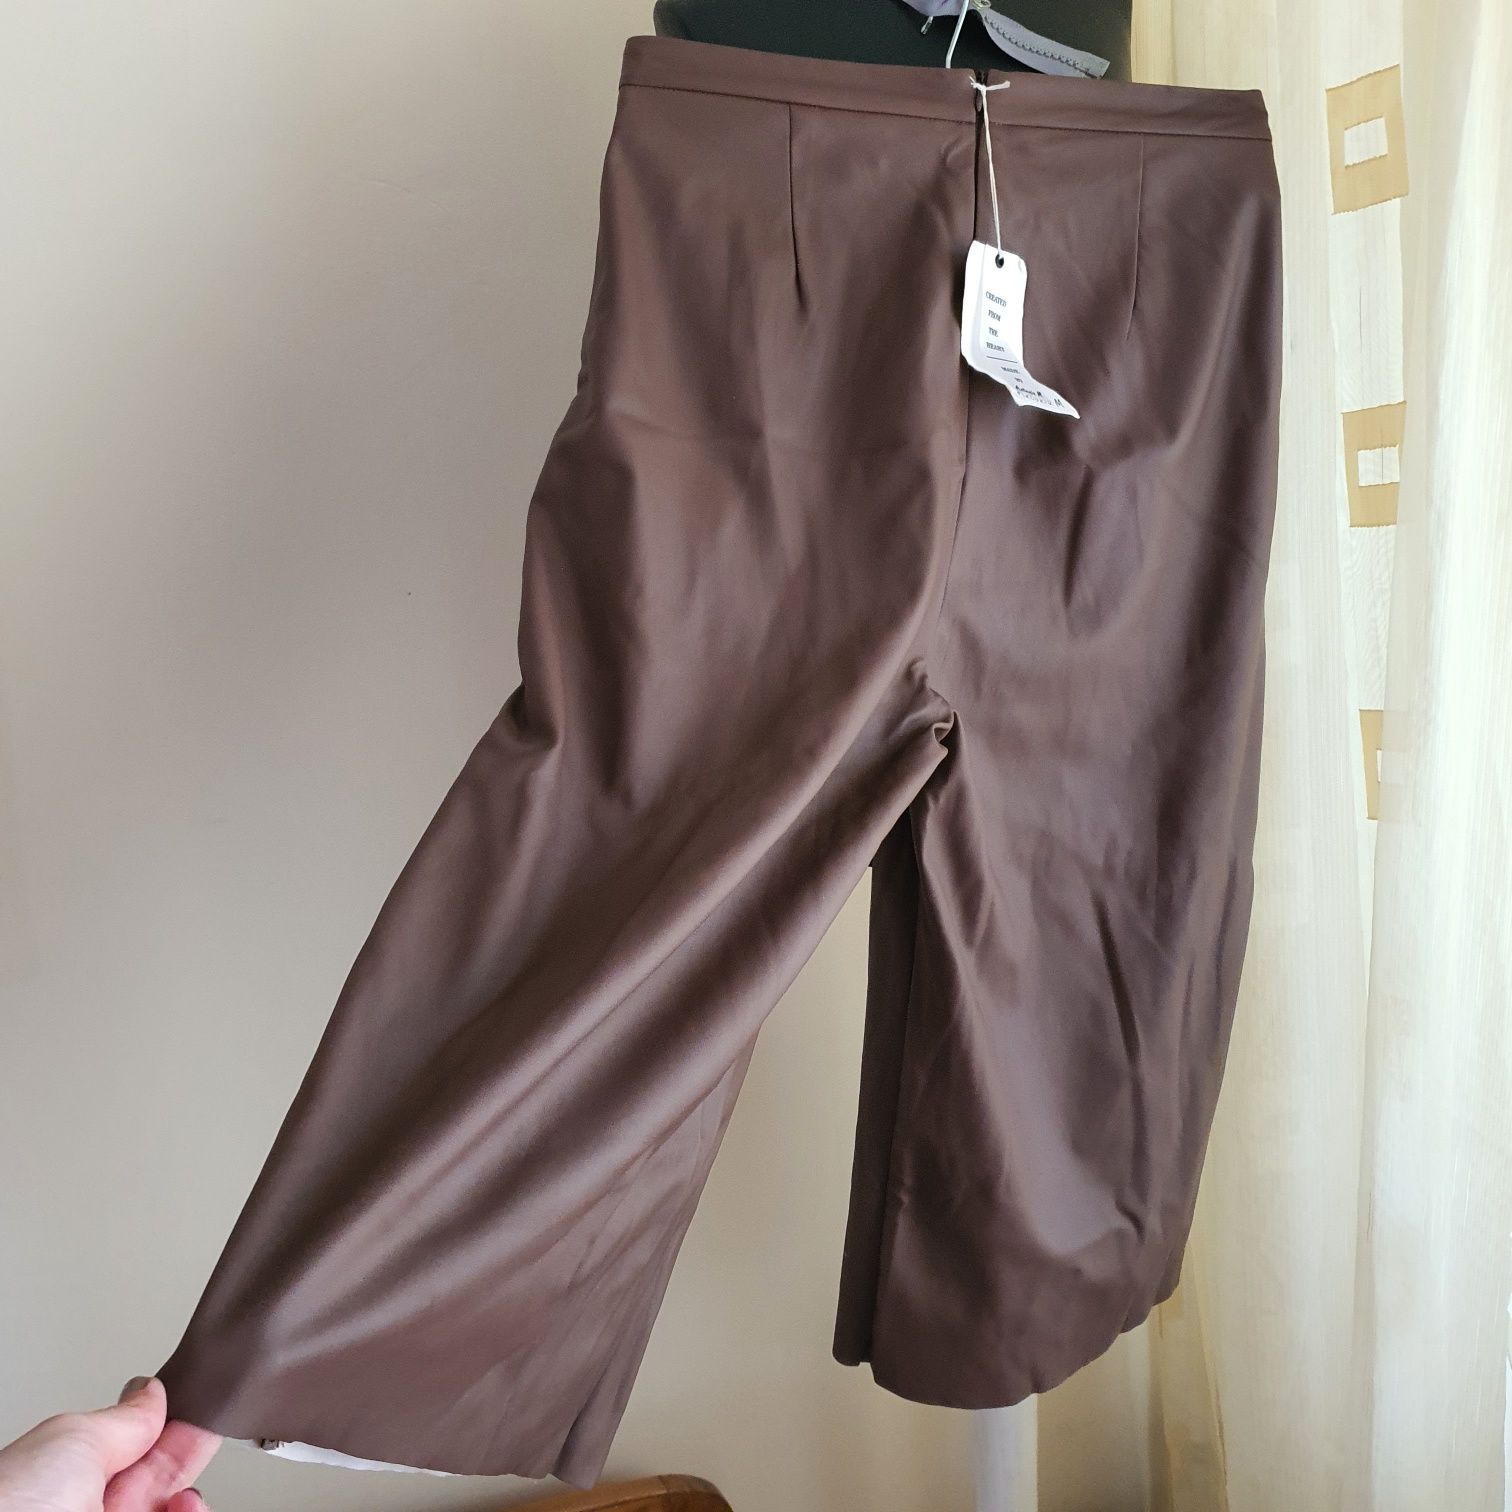 Pantaloni cullotes din piele ecologica ( stil Zara, bershka)